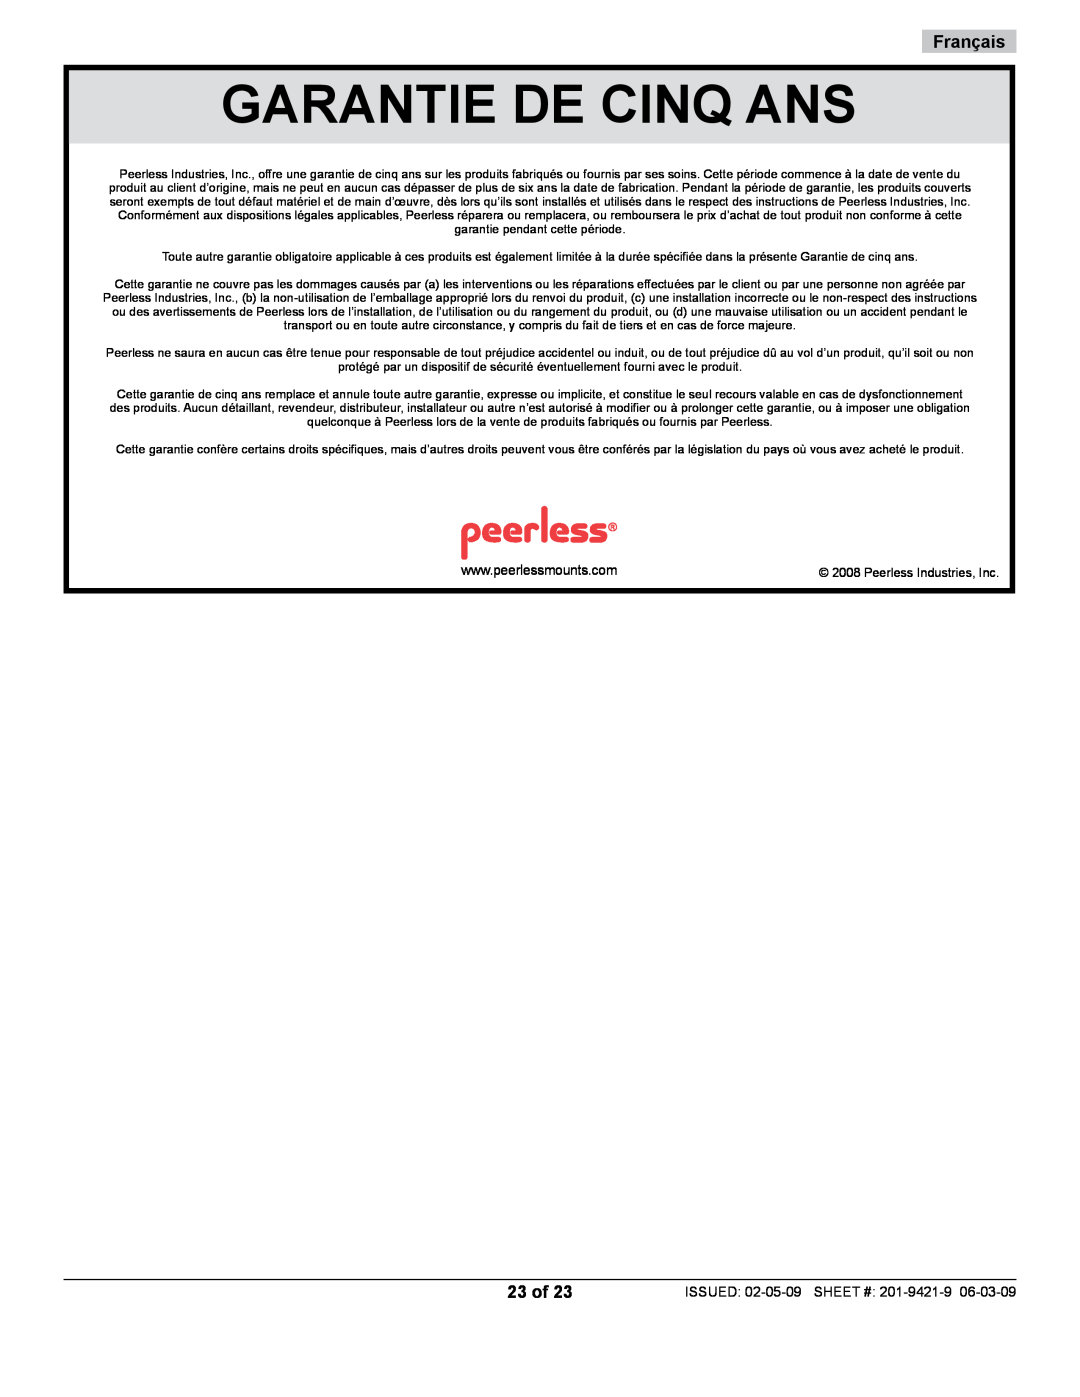 Peerless Industries ST630P-S manual Garantie De Cinq Ans, 23 of, Français 